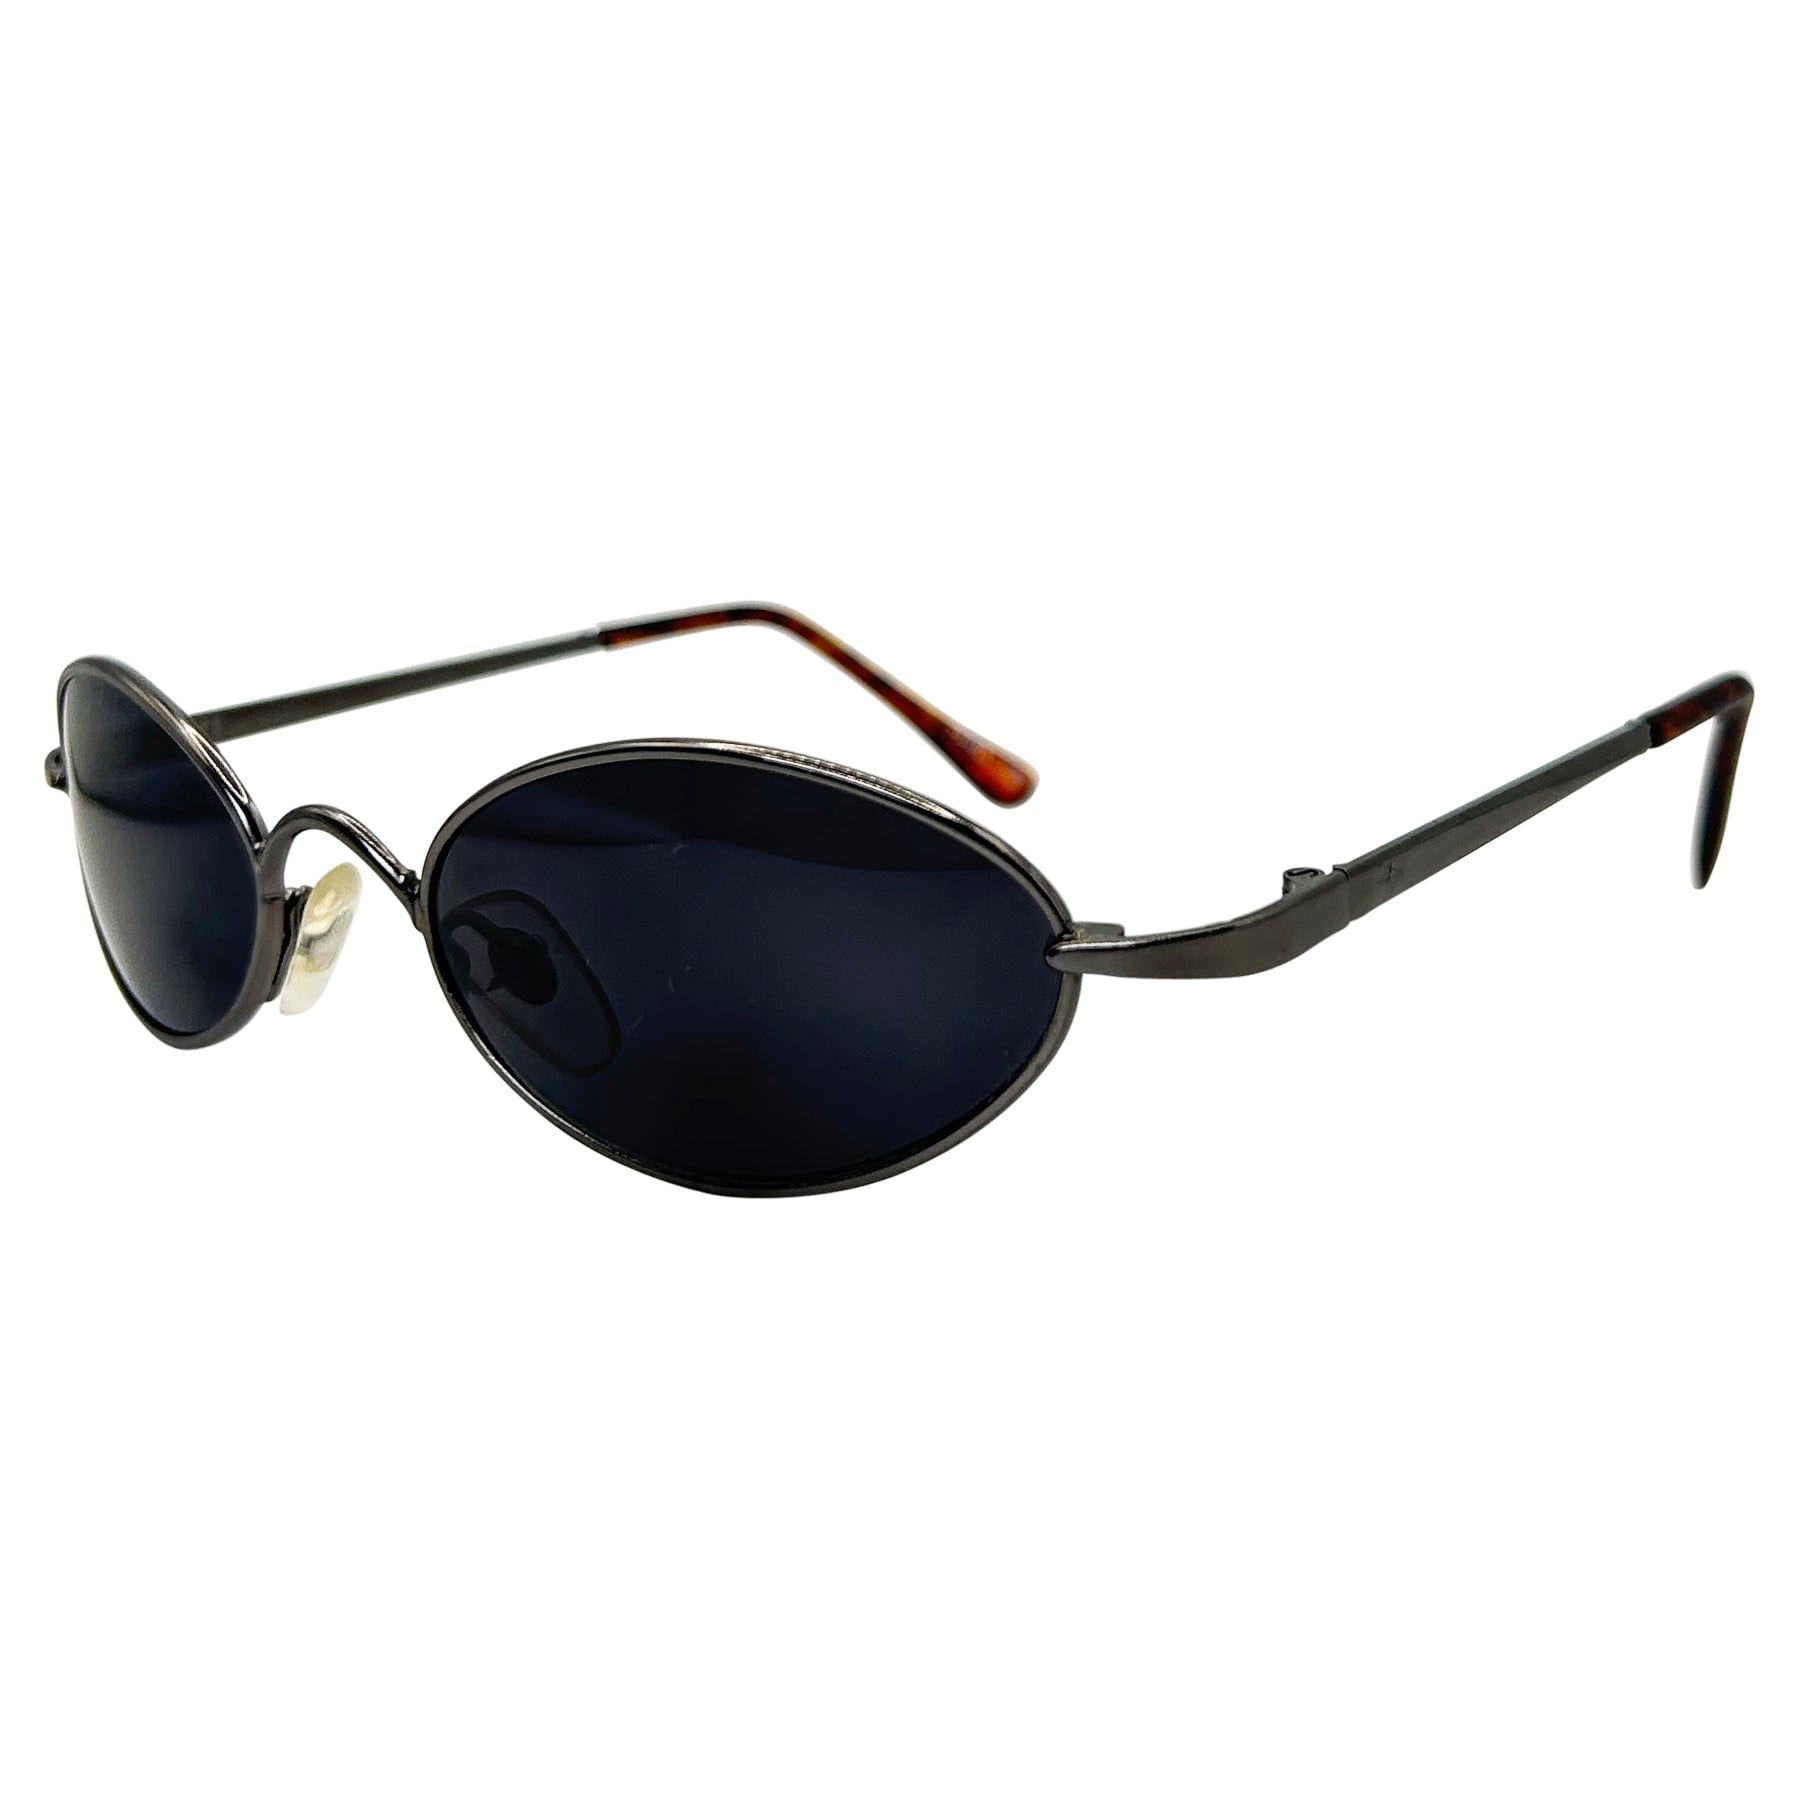 BRAD Oval 90s Sunglasses